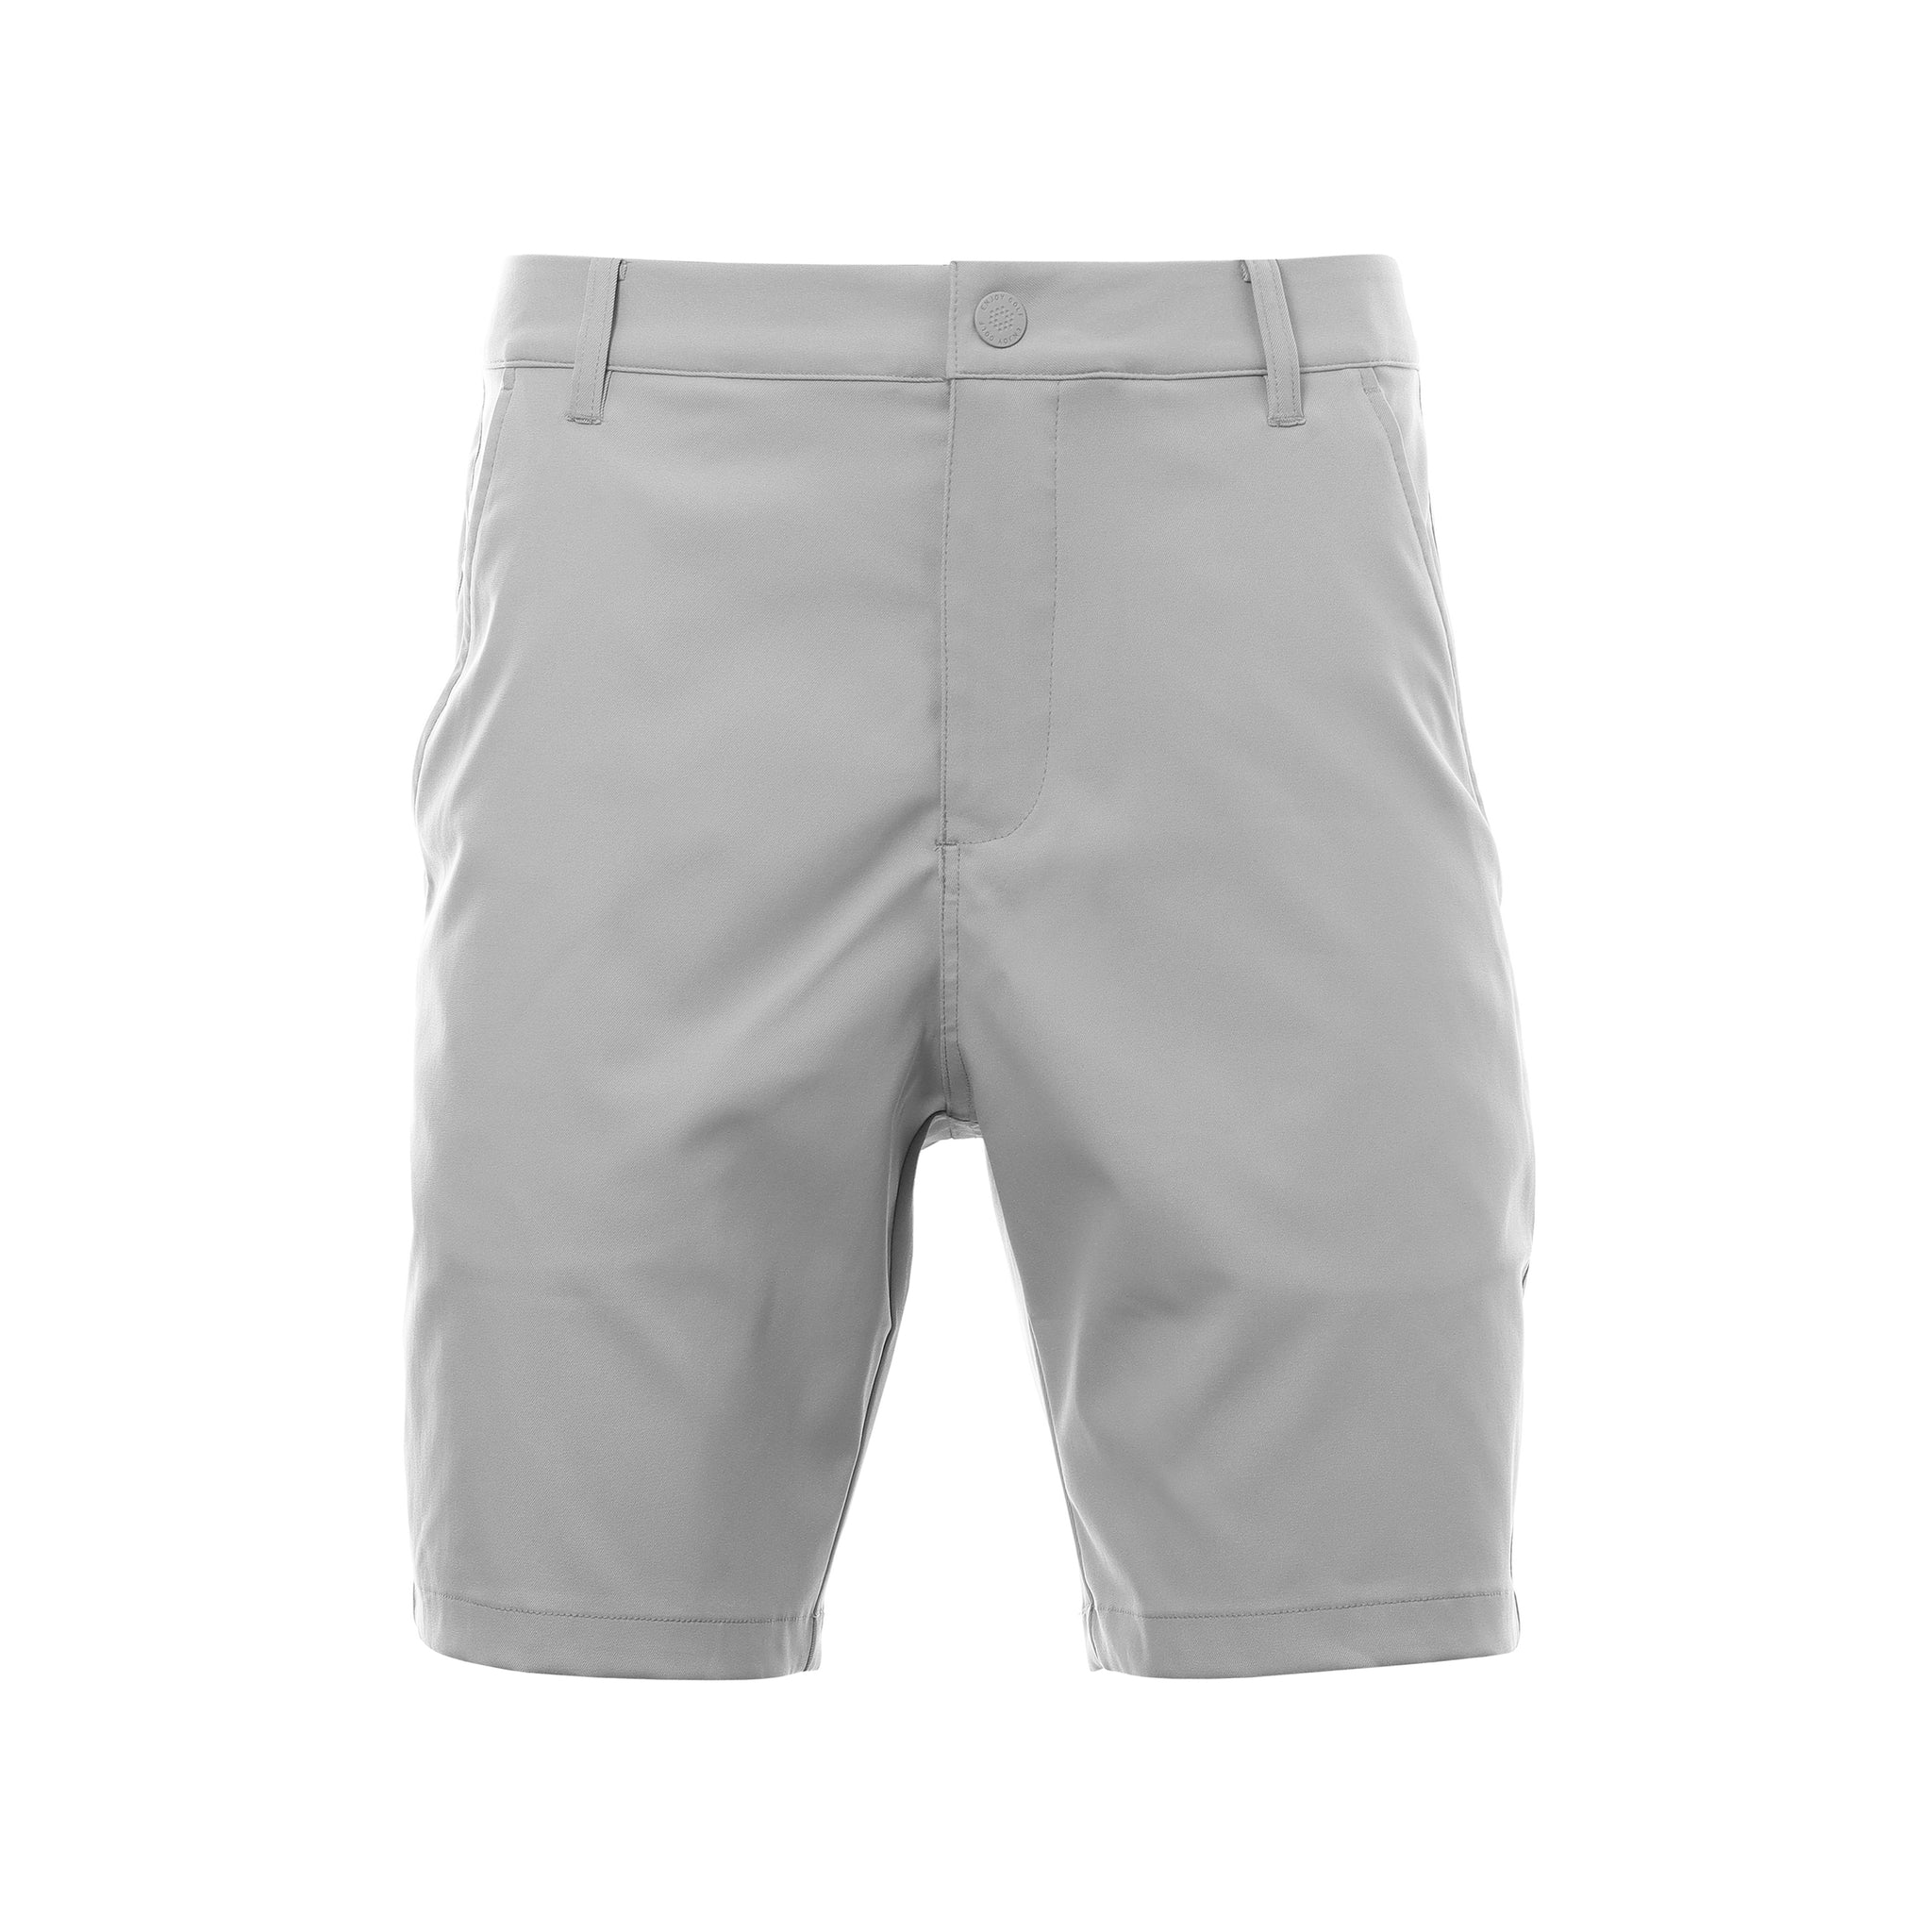 puma-golf-dealer-8-shorts-537788-ash-grey-04